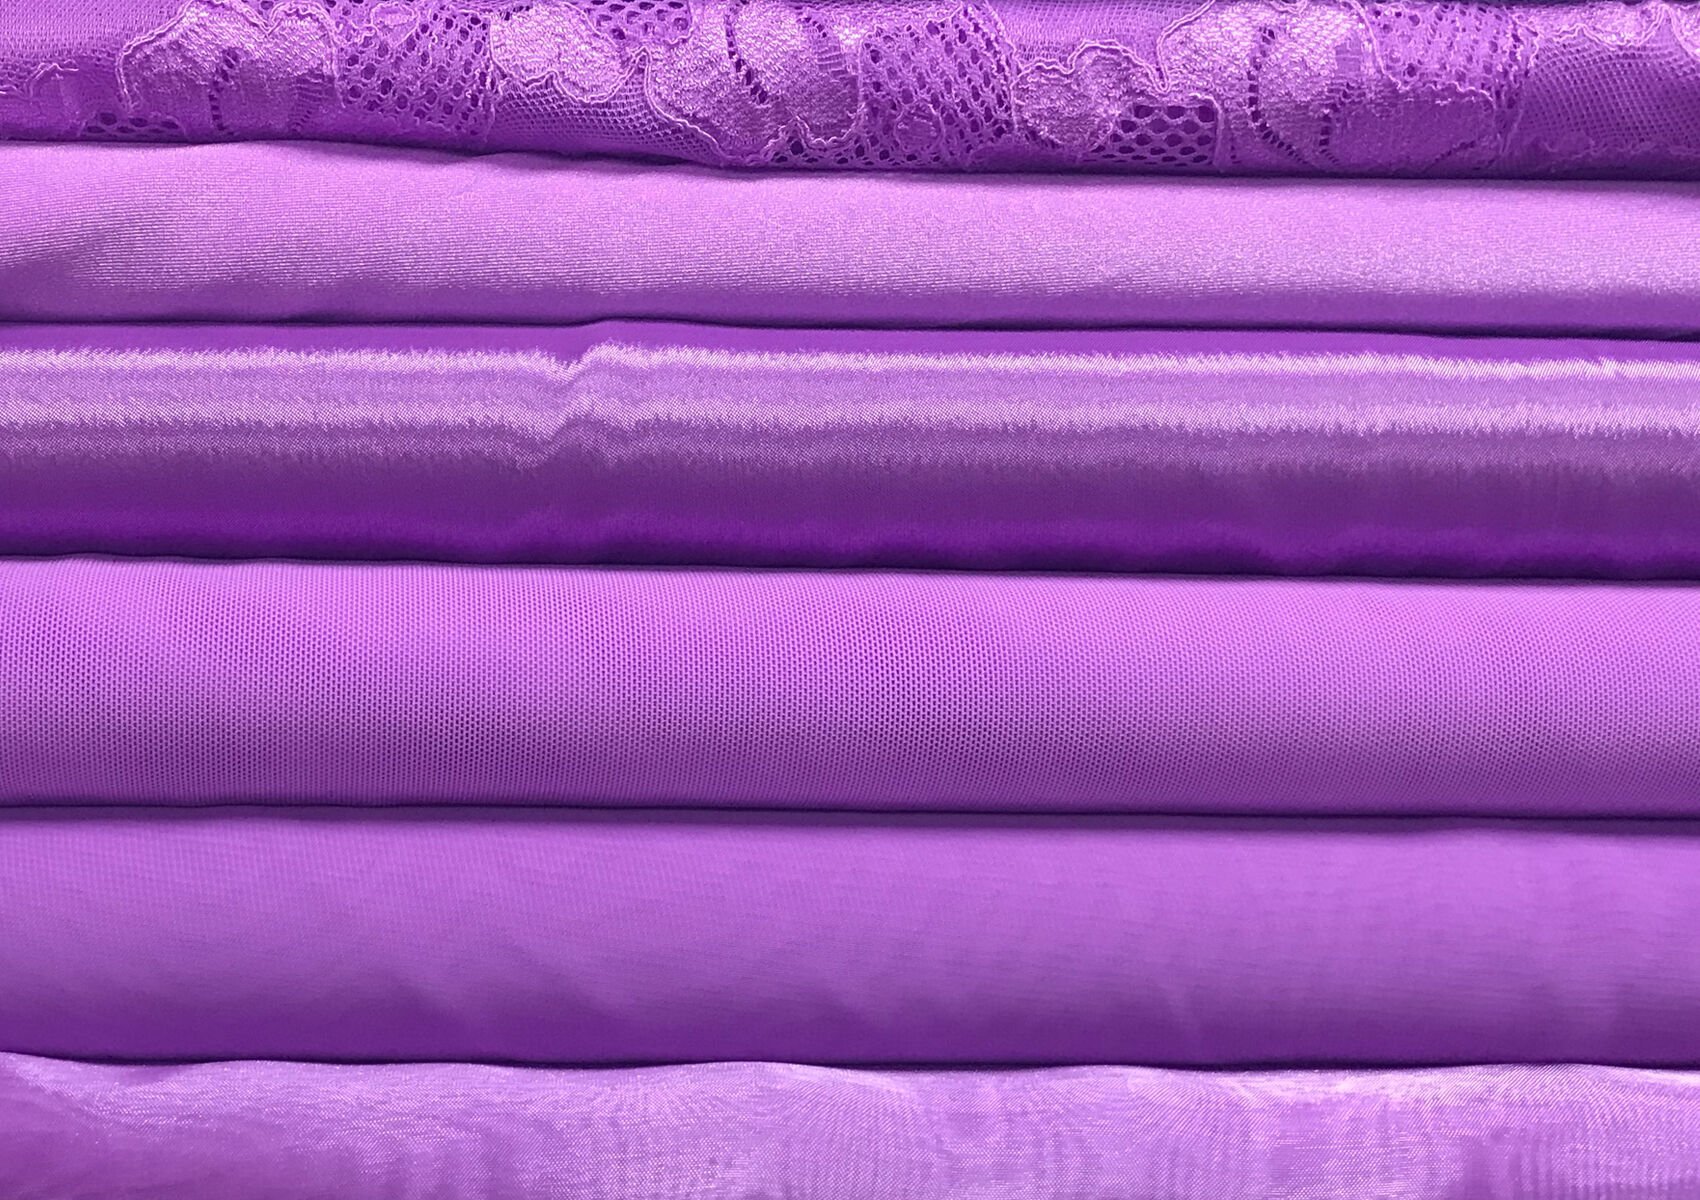 Browse lilac dream colour fabric